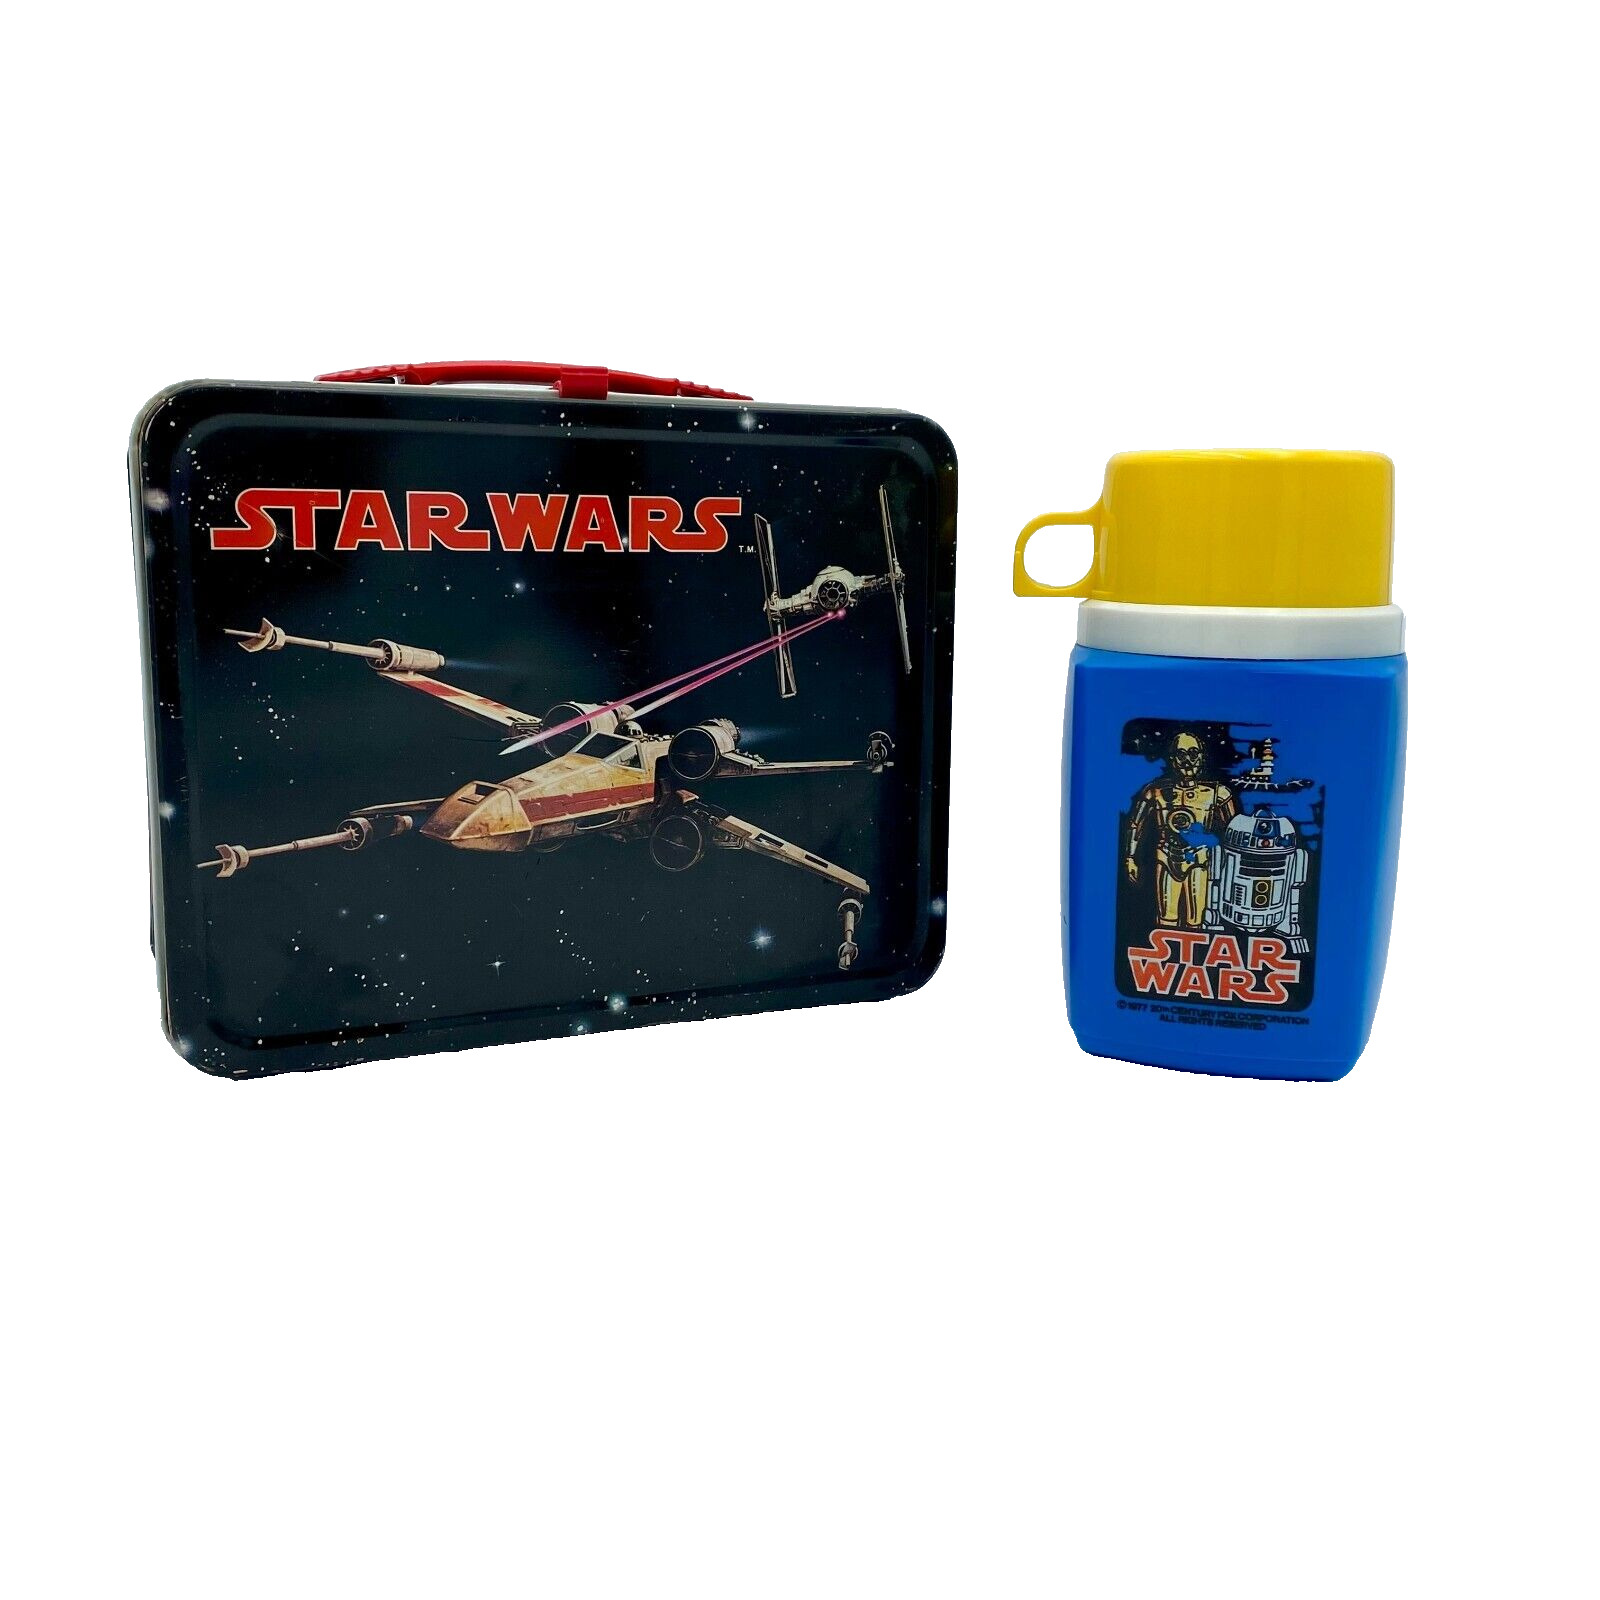 Vintage 1977 Star Wars Metal Lunchbox and Thermos, King-Seeley, Luke Skywalker